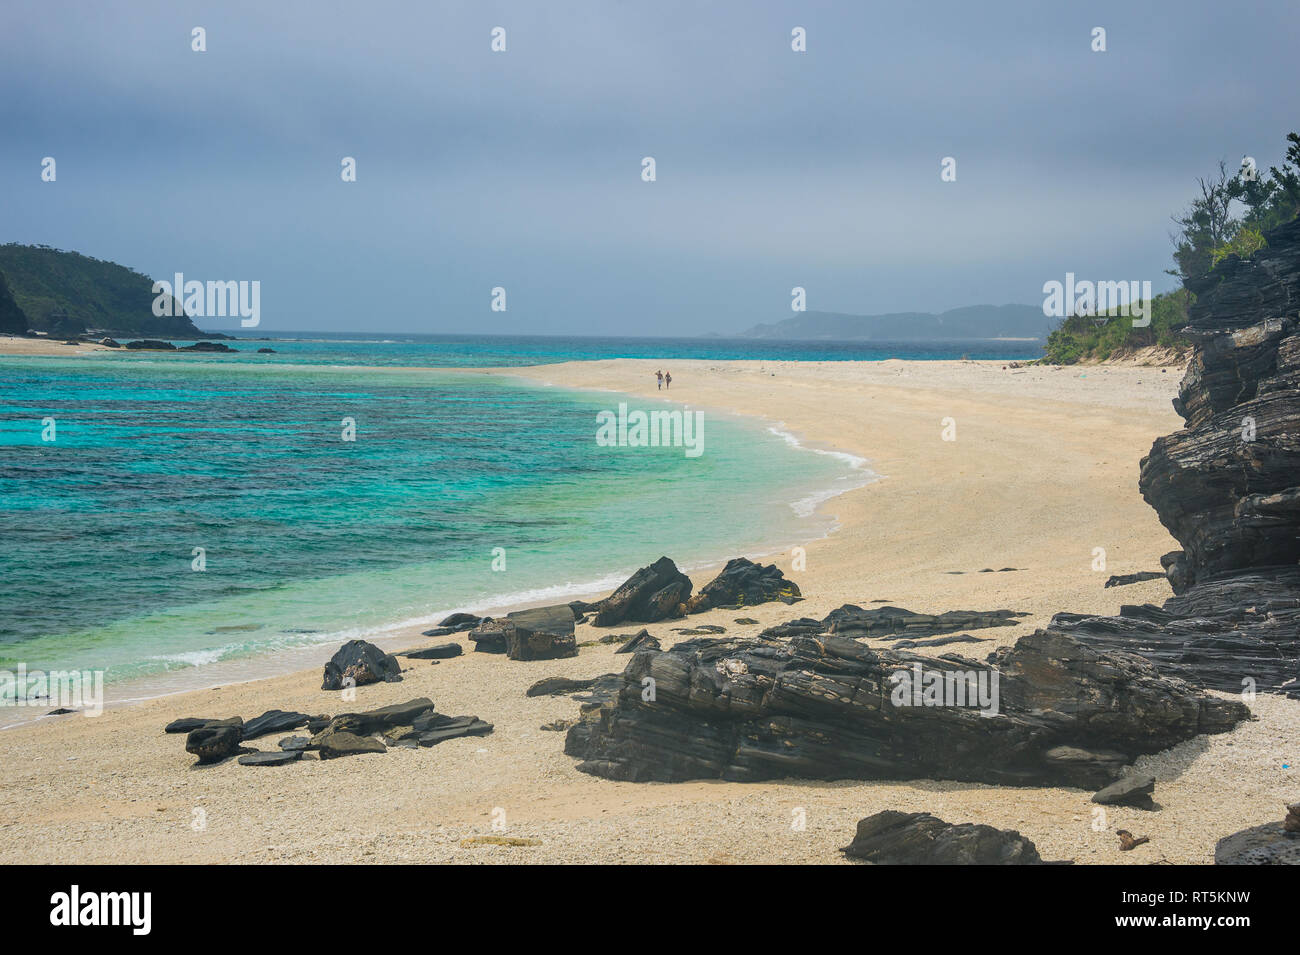 Japan, Okinawa Islands, Kerama Islands, Zamami Island, East China Sea, Furuzamami Beach Stock Photo